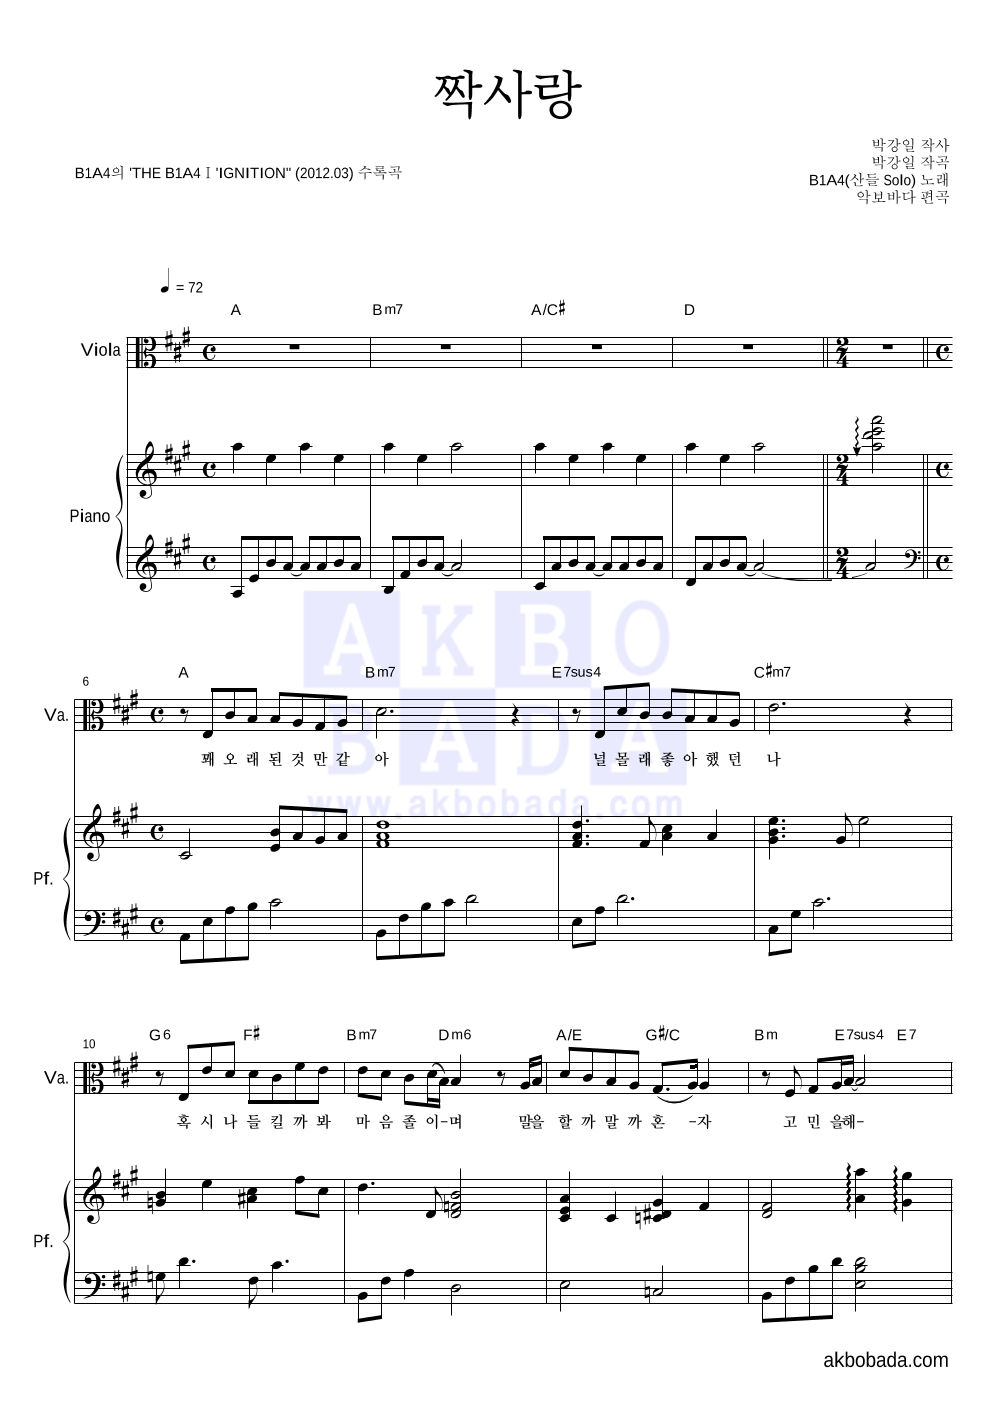 B1A4 - 짝사랑 (산들 Solo) 비올라&피아노 악보 